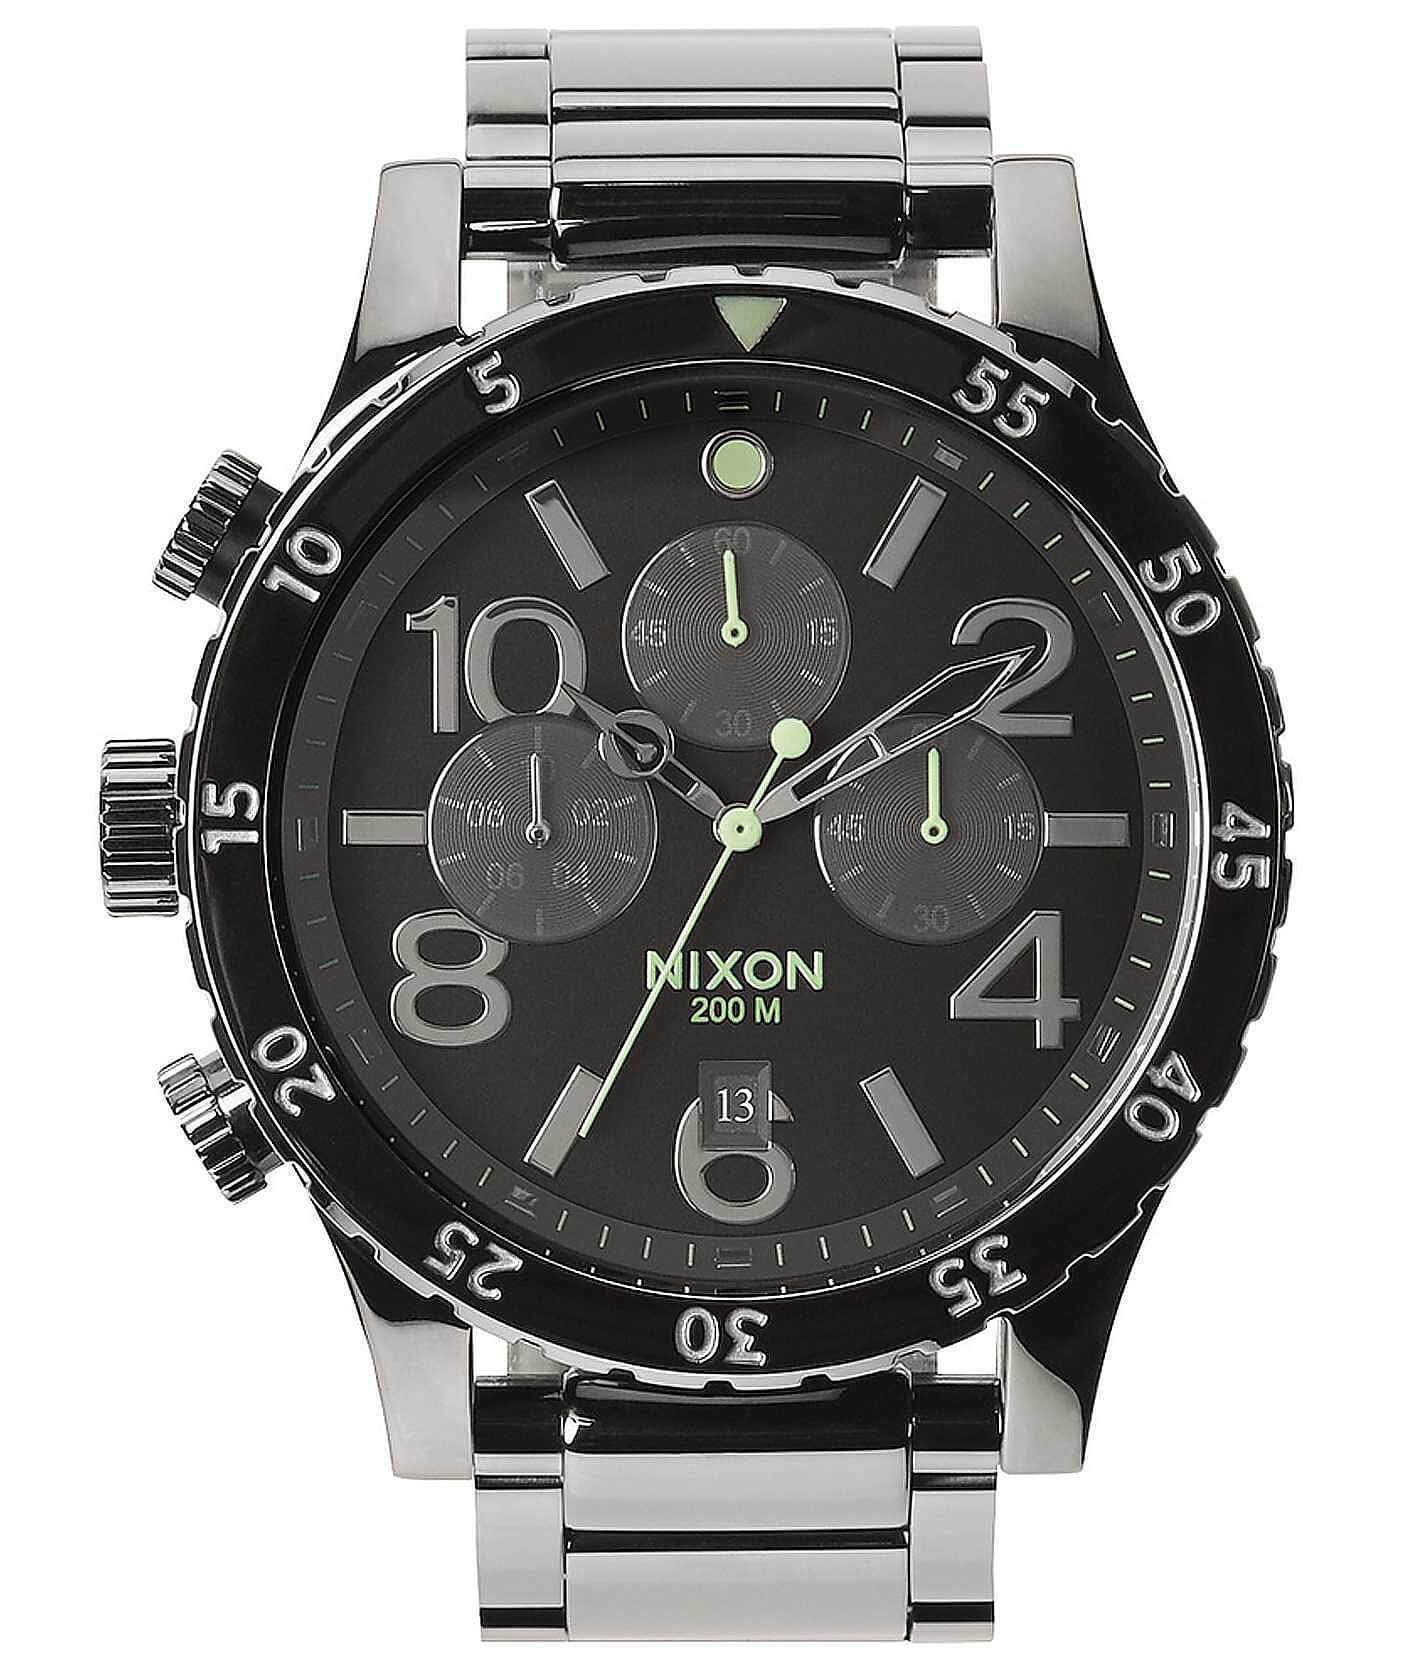 Nixon The 48-20 Chrono Watch - Men's Watches in Polished Gunmetal